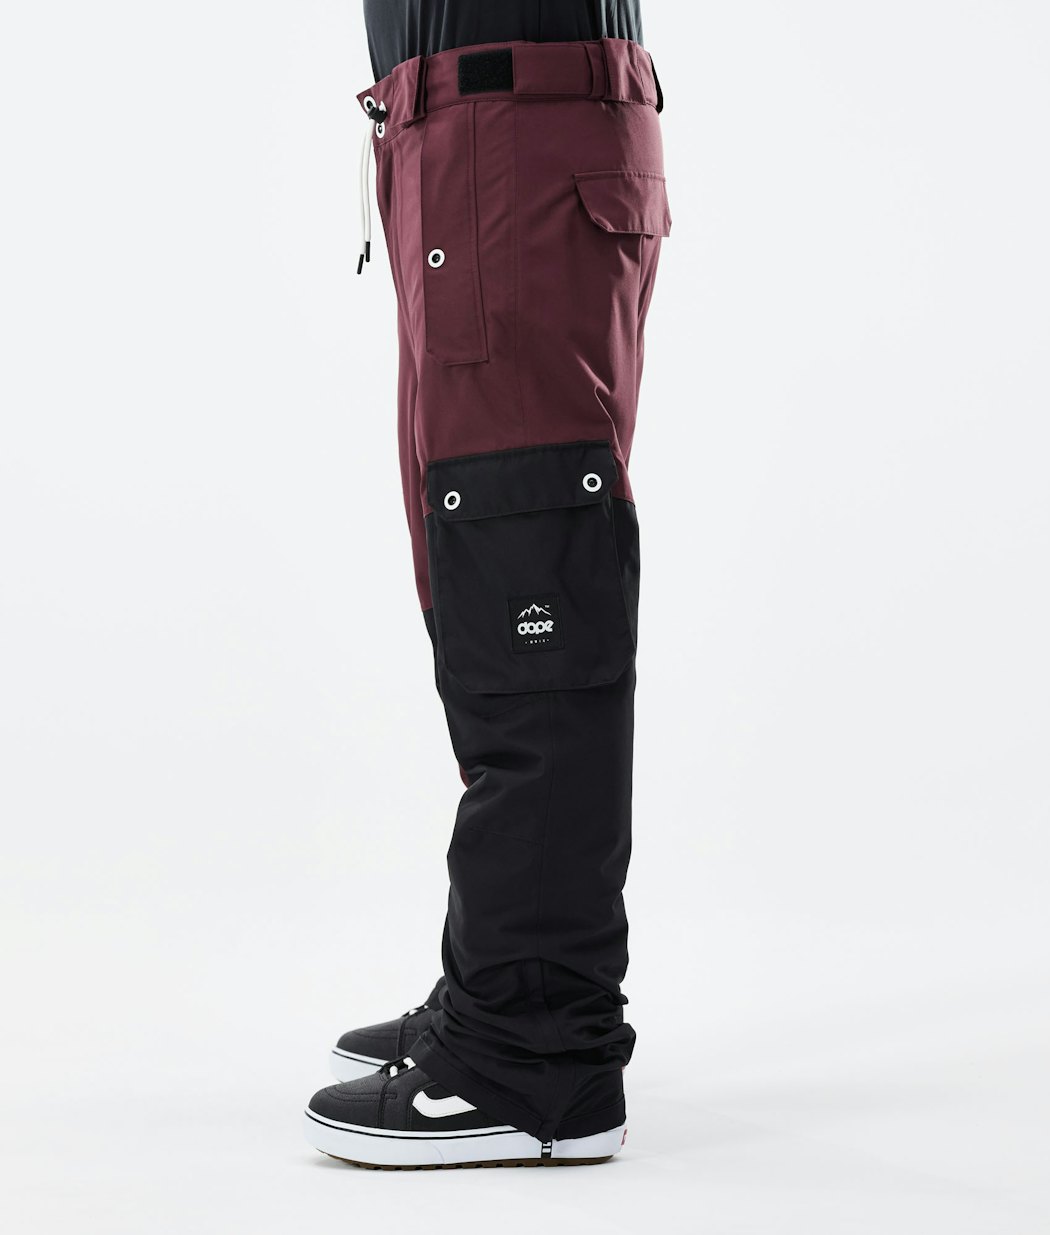 Dope Adept Snowboard Pants Burgundy/Black